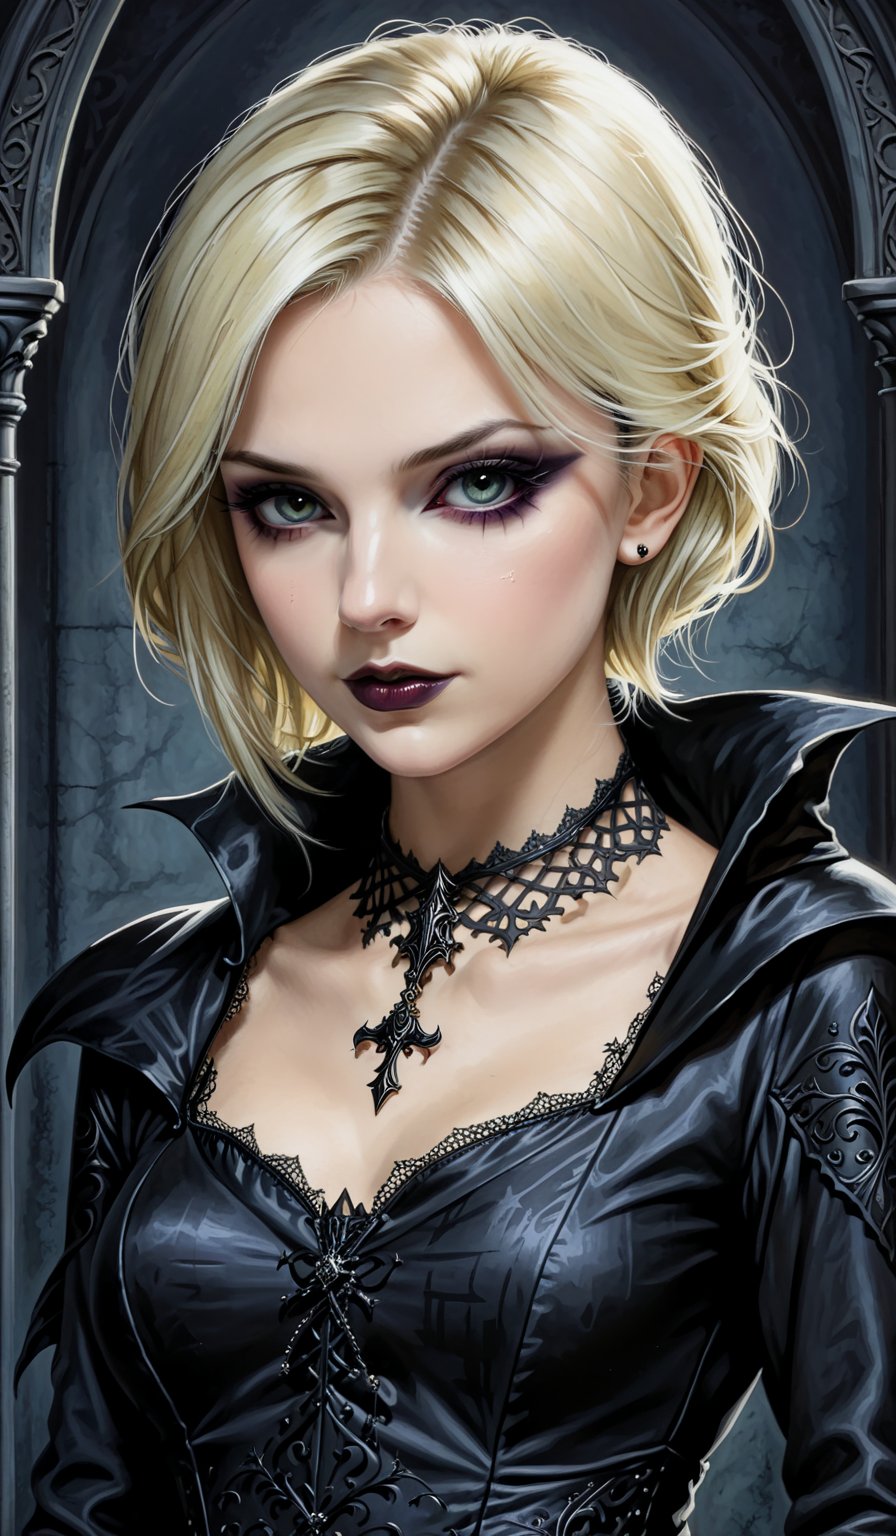 score_9, score_8_up, score_7_up, score_6_up, masterpiece,best quality,illustration,style of Jessica Galbreth portrait of dark gothic girl,Gothic,Short blonde hair,